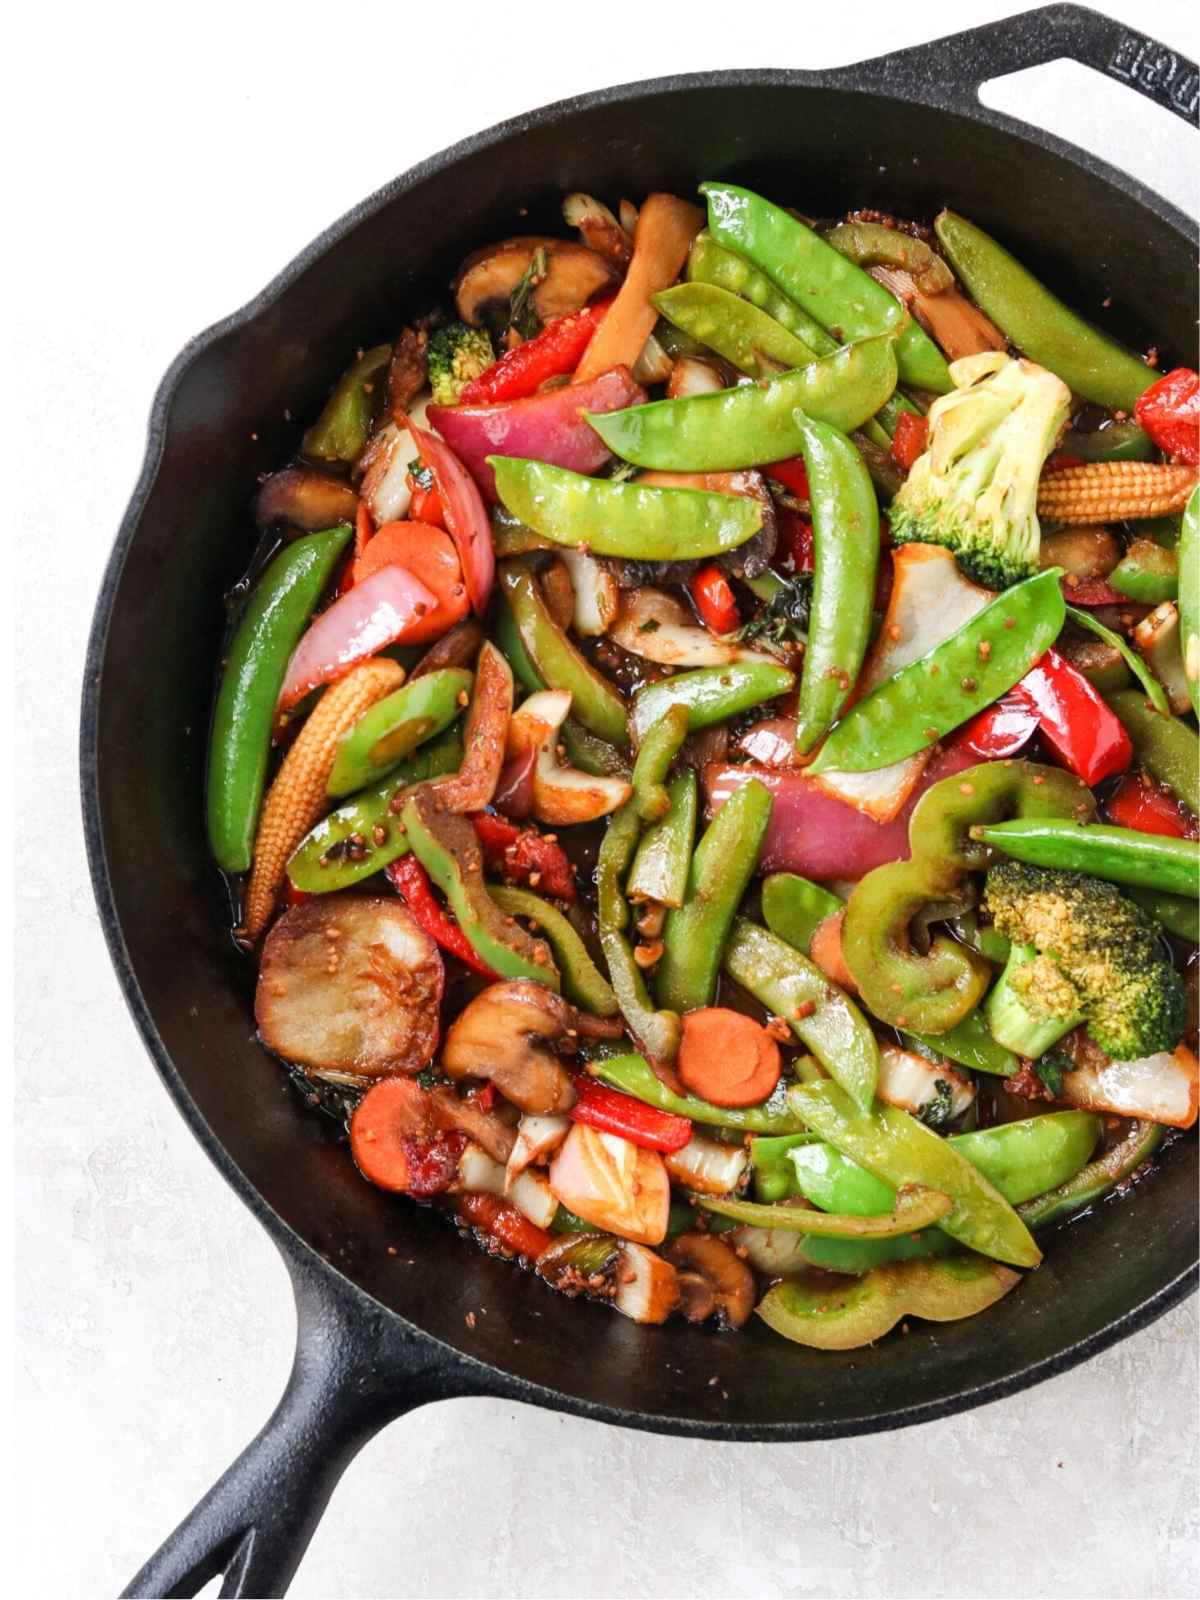 Stir fry vegetables in a black wok.